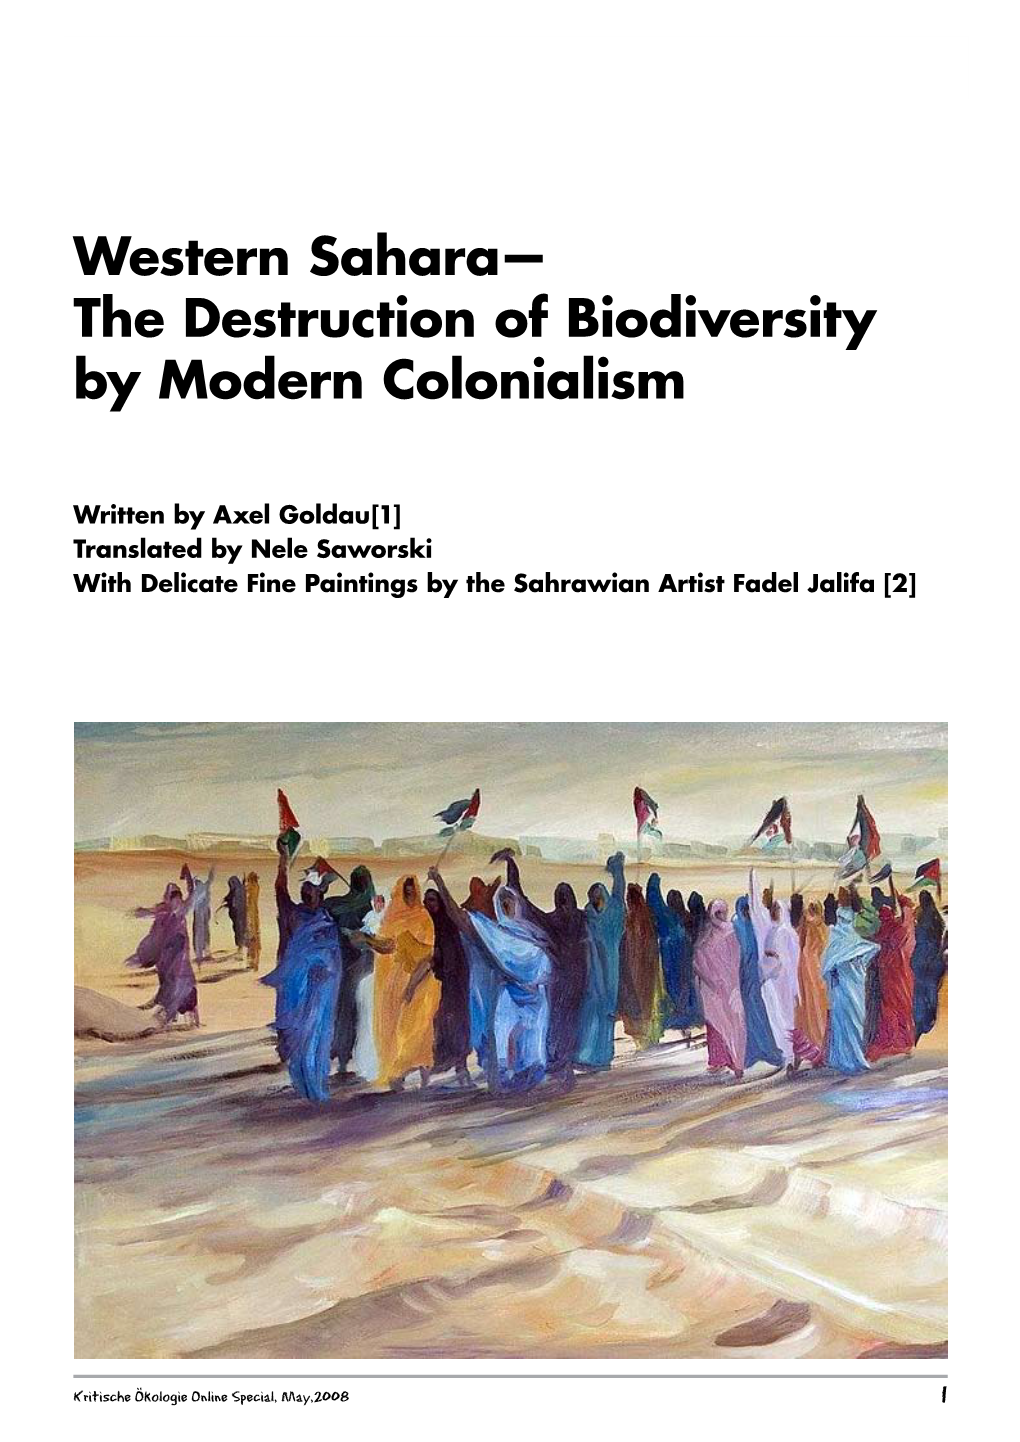 Western Sahara— the Destruction of Biodiversity by Modern Colonialism